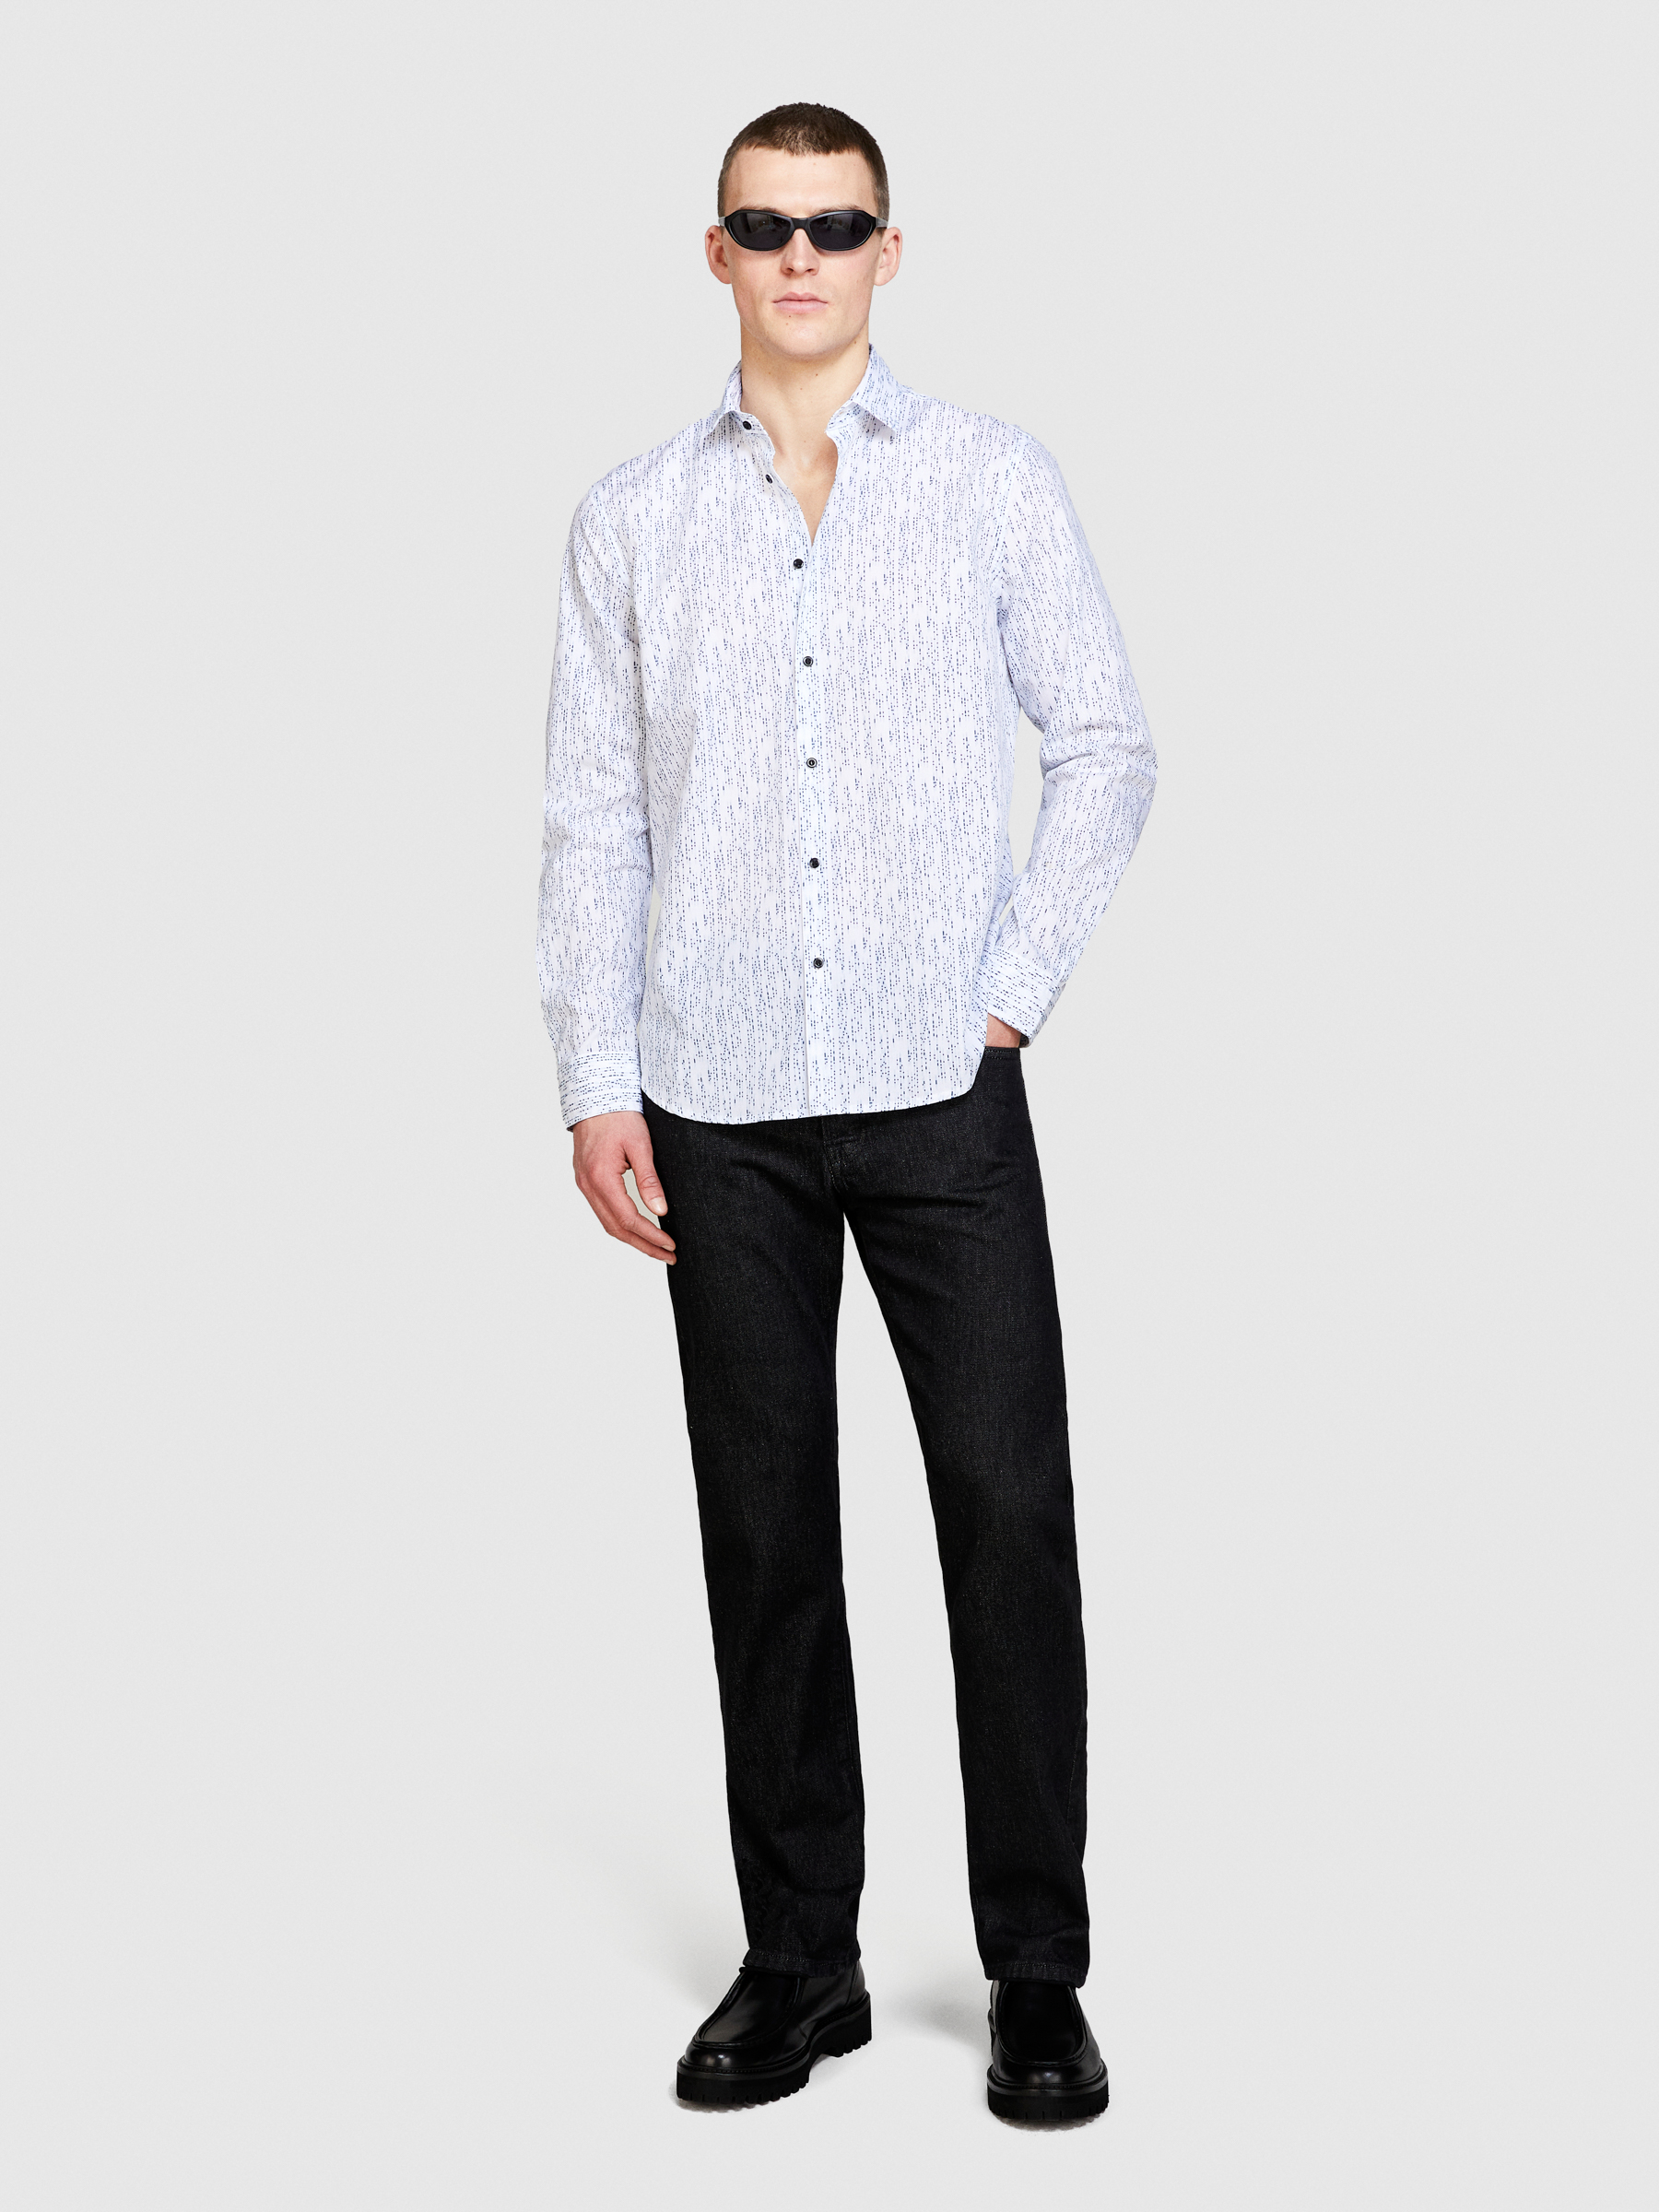 Sisley - Printed Shirt, Man, White, Size: 41